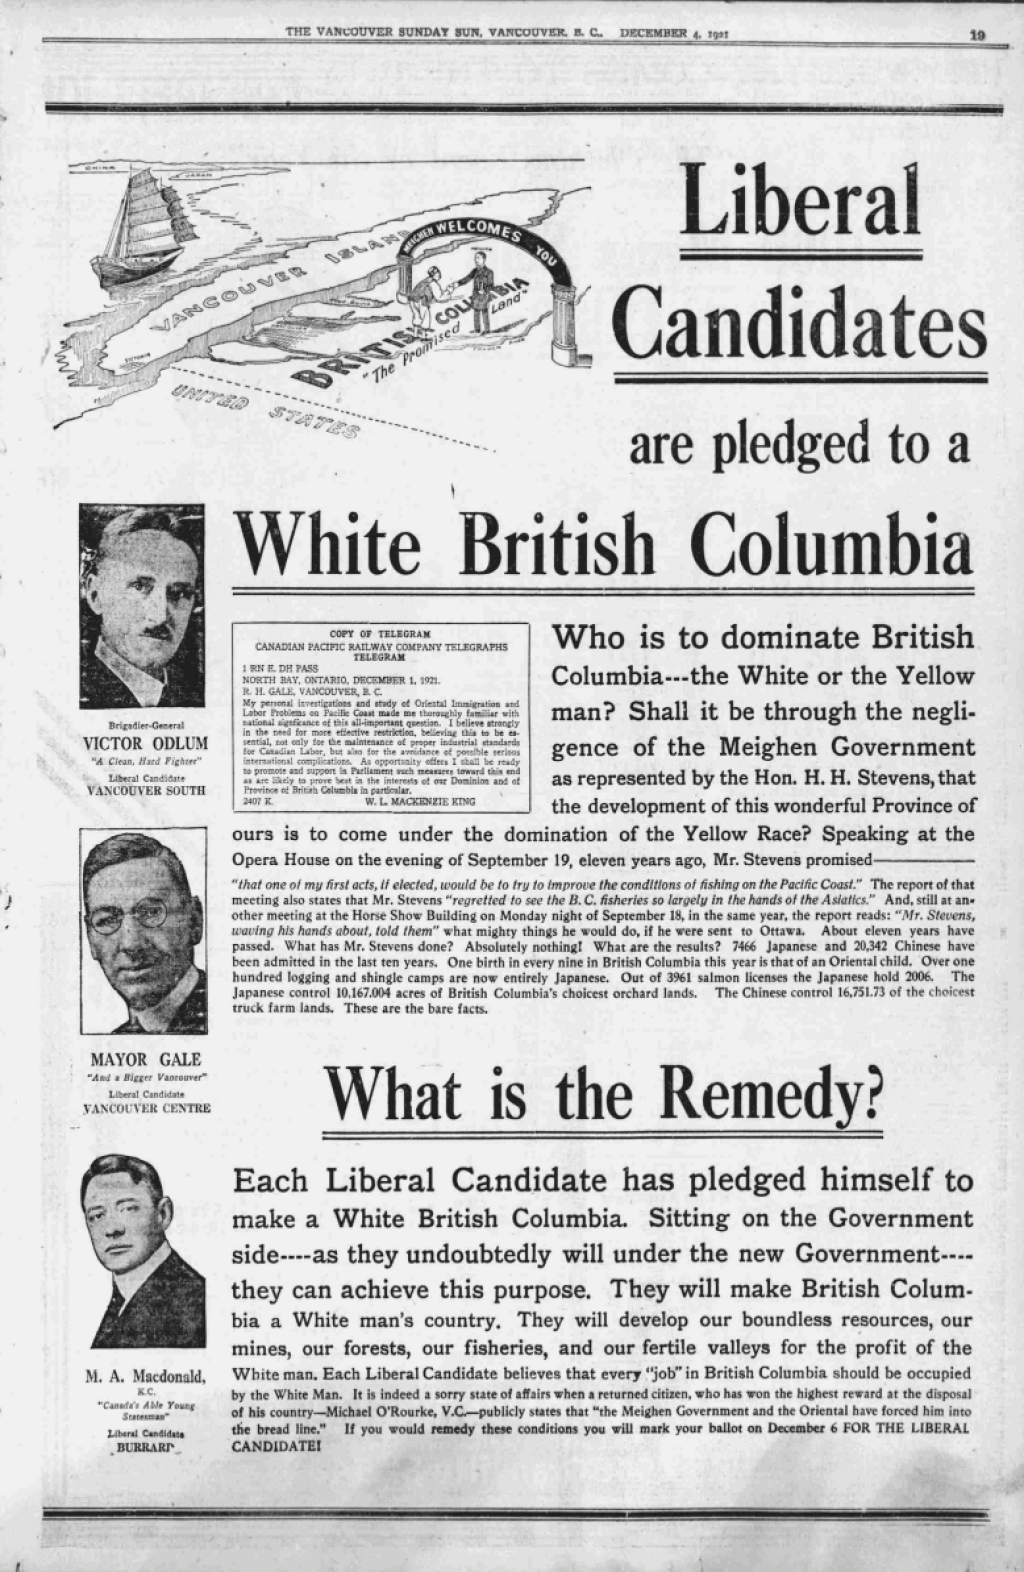 The Vancouver Sunday Sun, 4 December 1921, p.19.